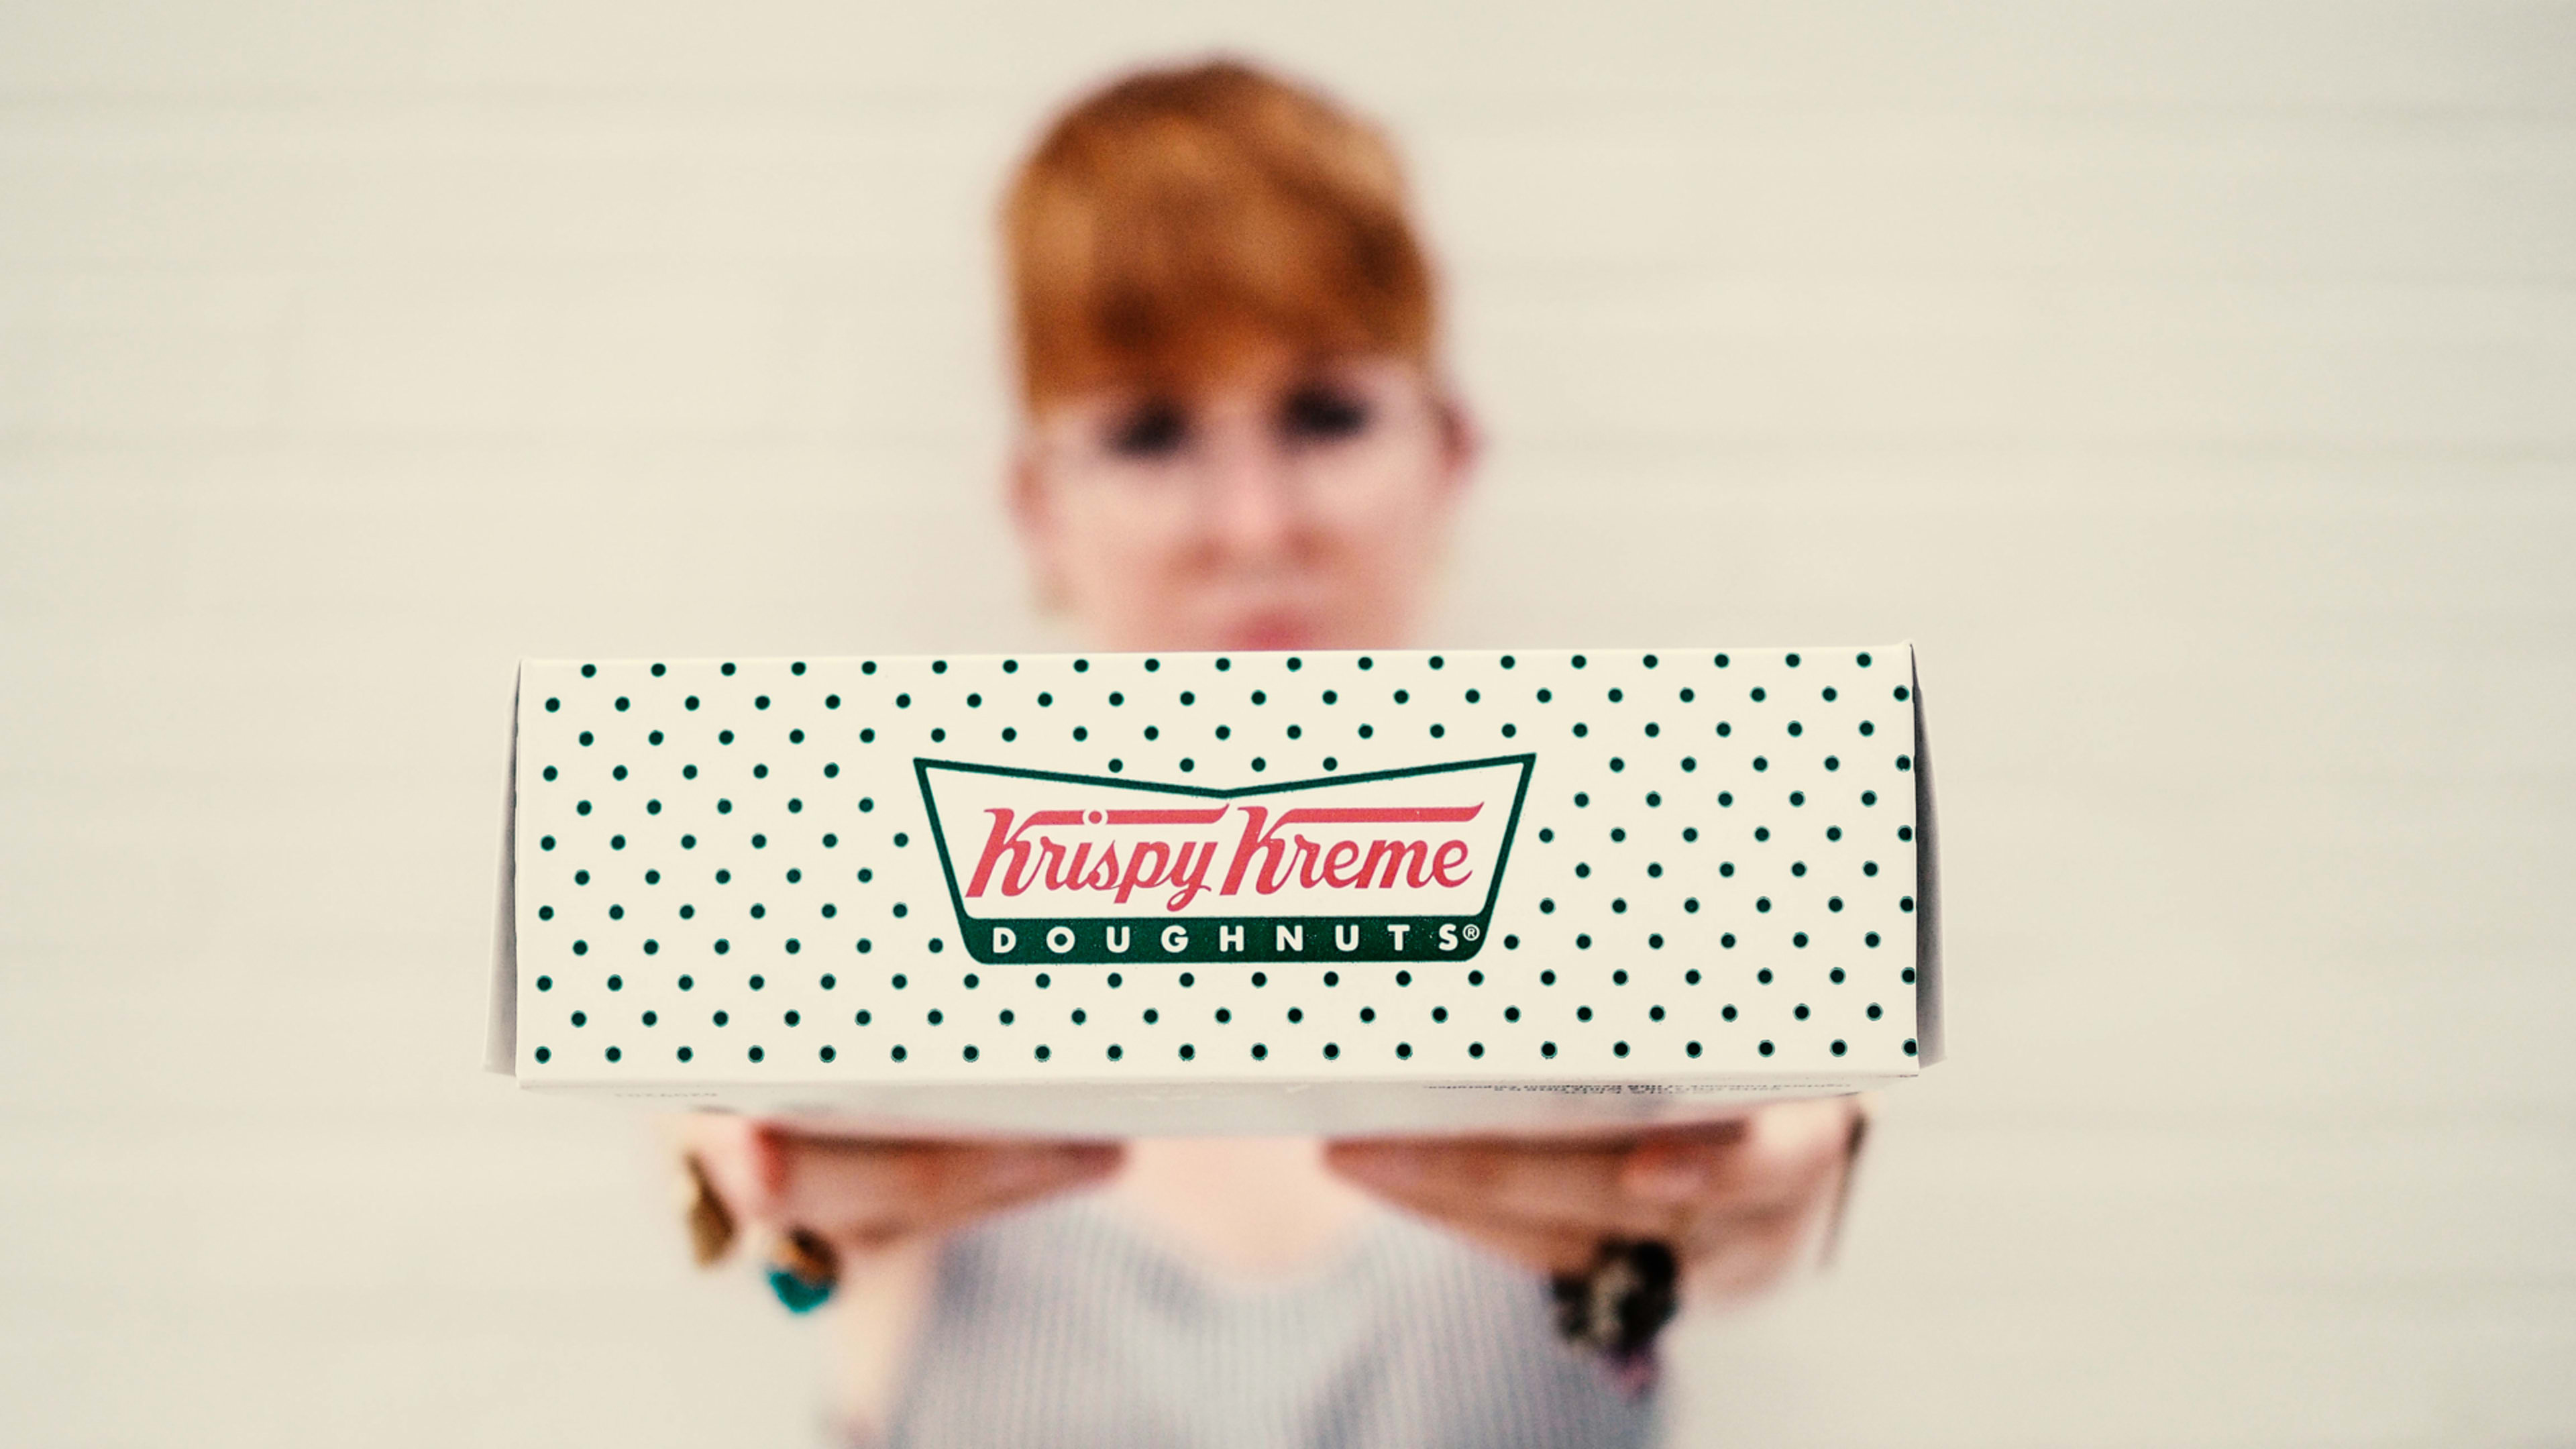 2020 graduates, here’s how to get your free Krispy Kreme dozen doughnuts